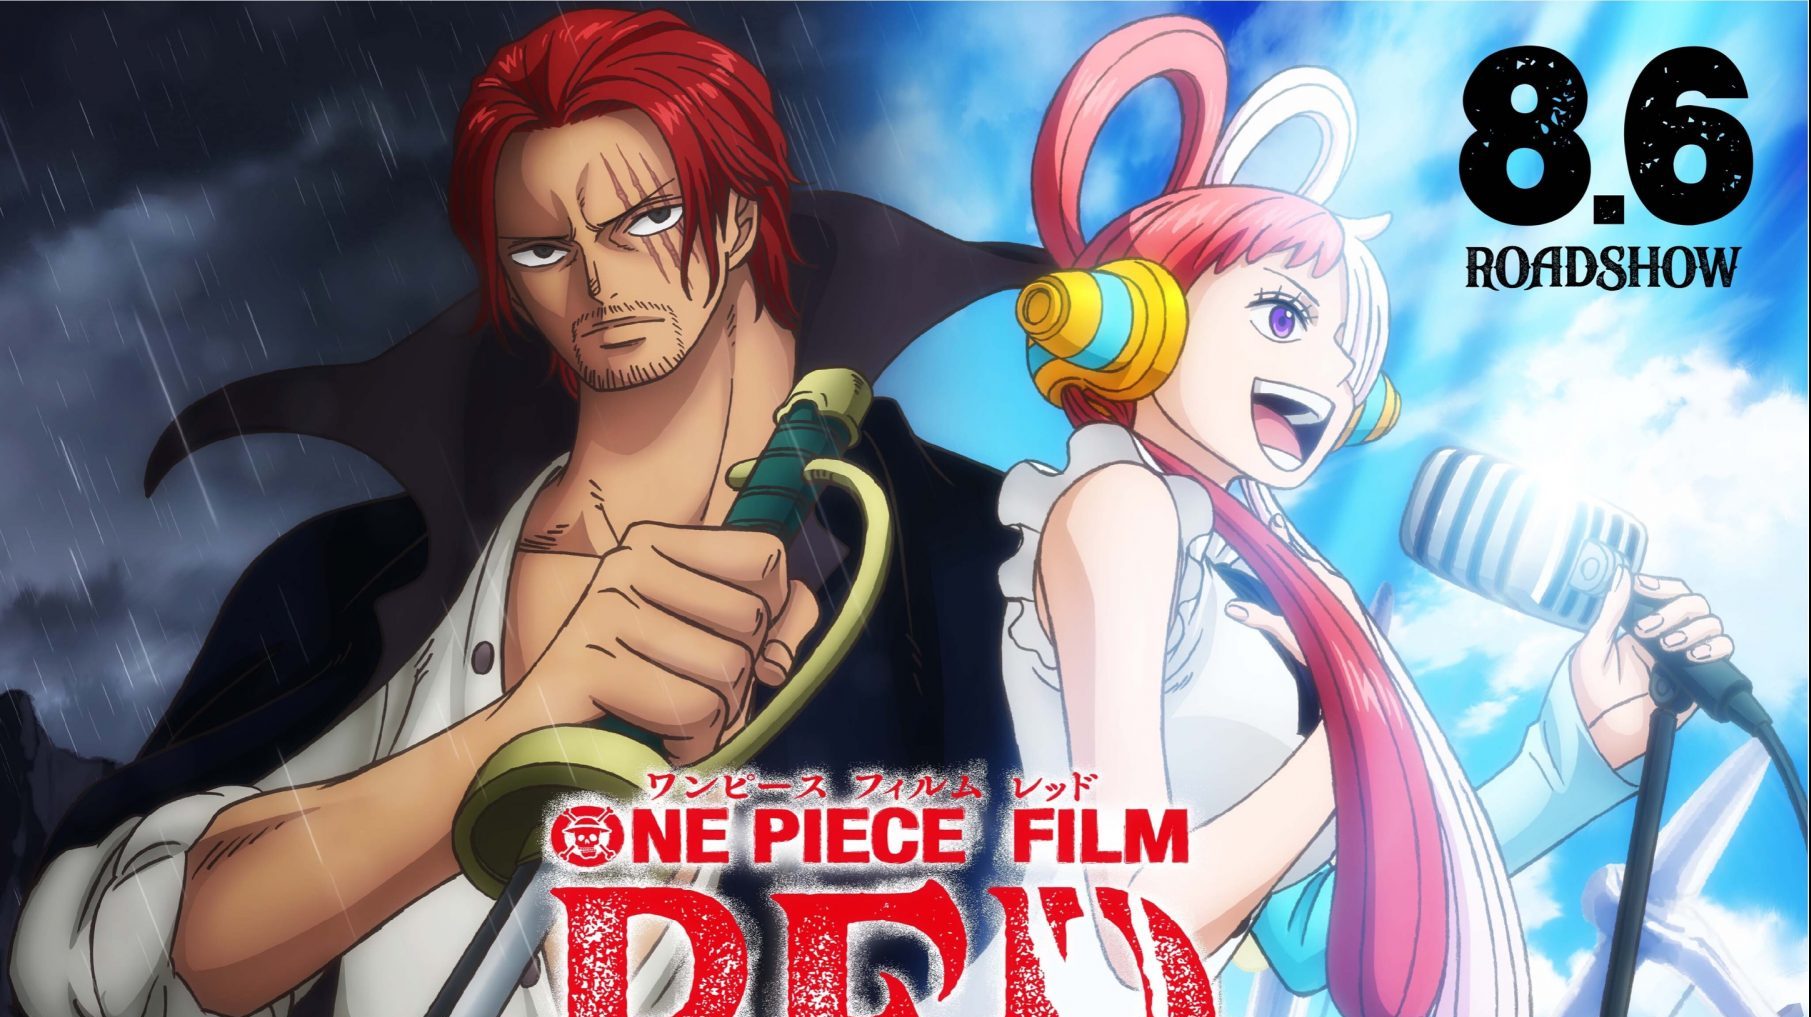 One Piece Film Red ทำรายได้กว่า 2.25 พันล้านเยน คว้าอันดับ 1 Box Office